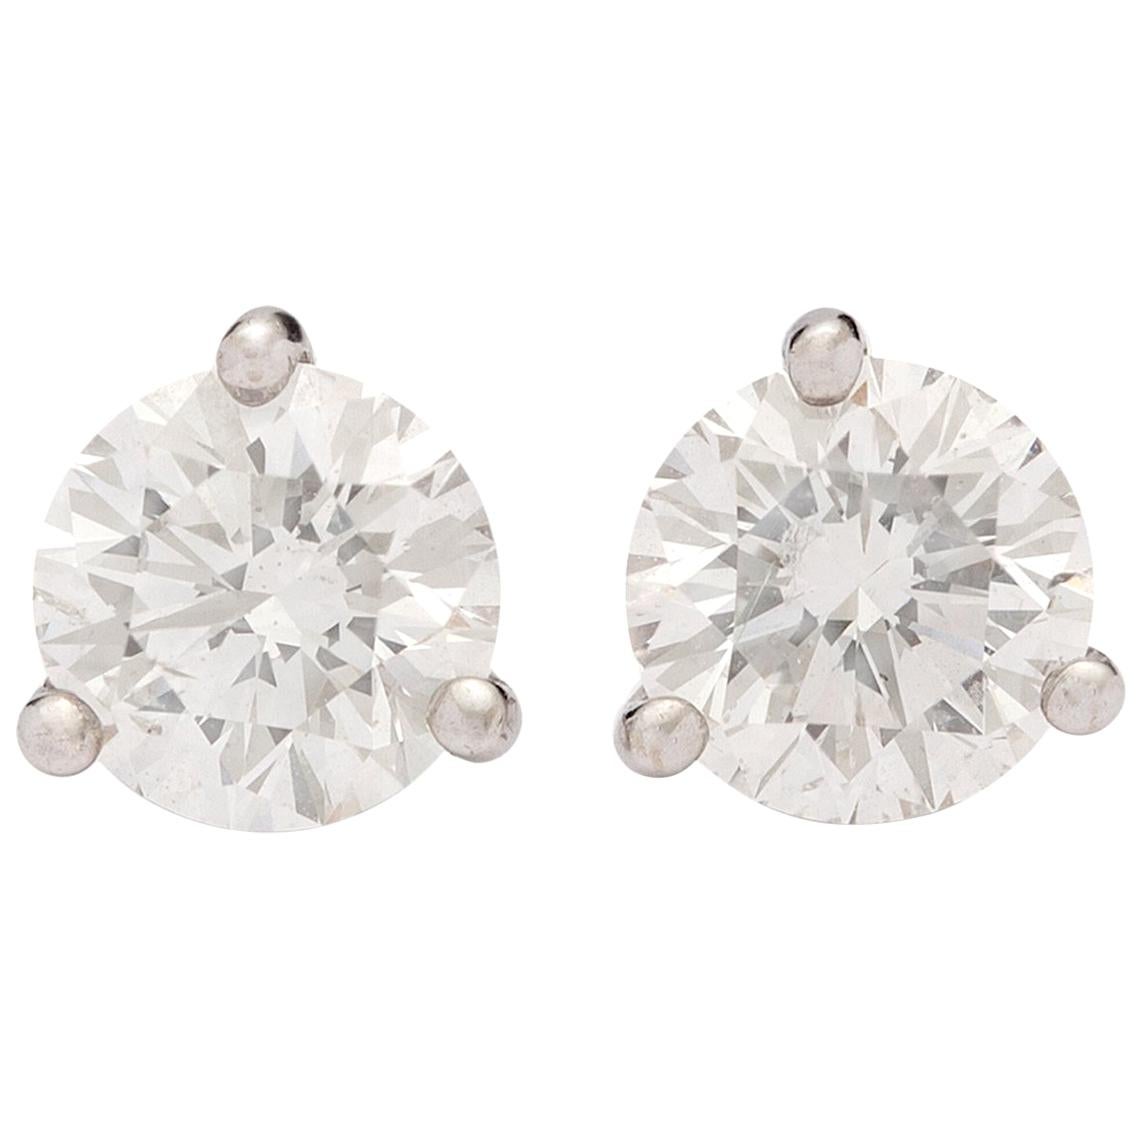 2.25 Carat Diamond Stud Earrings in Platinum Martini Setting